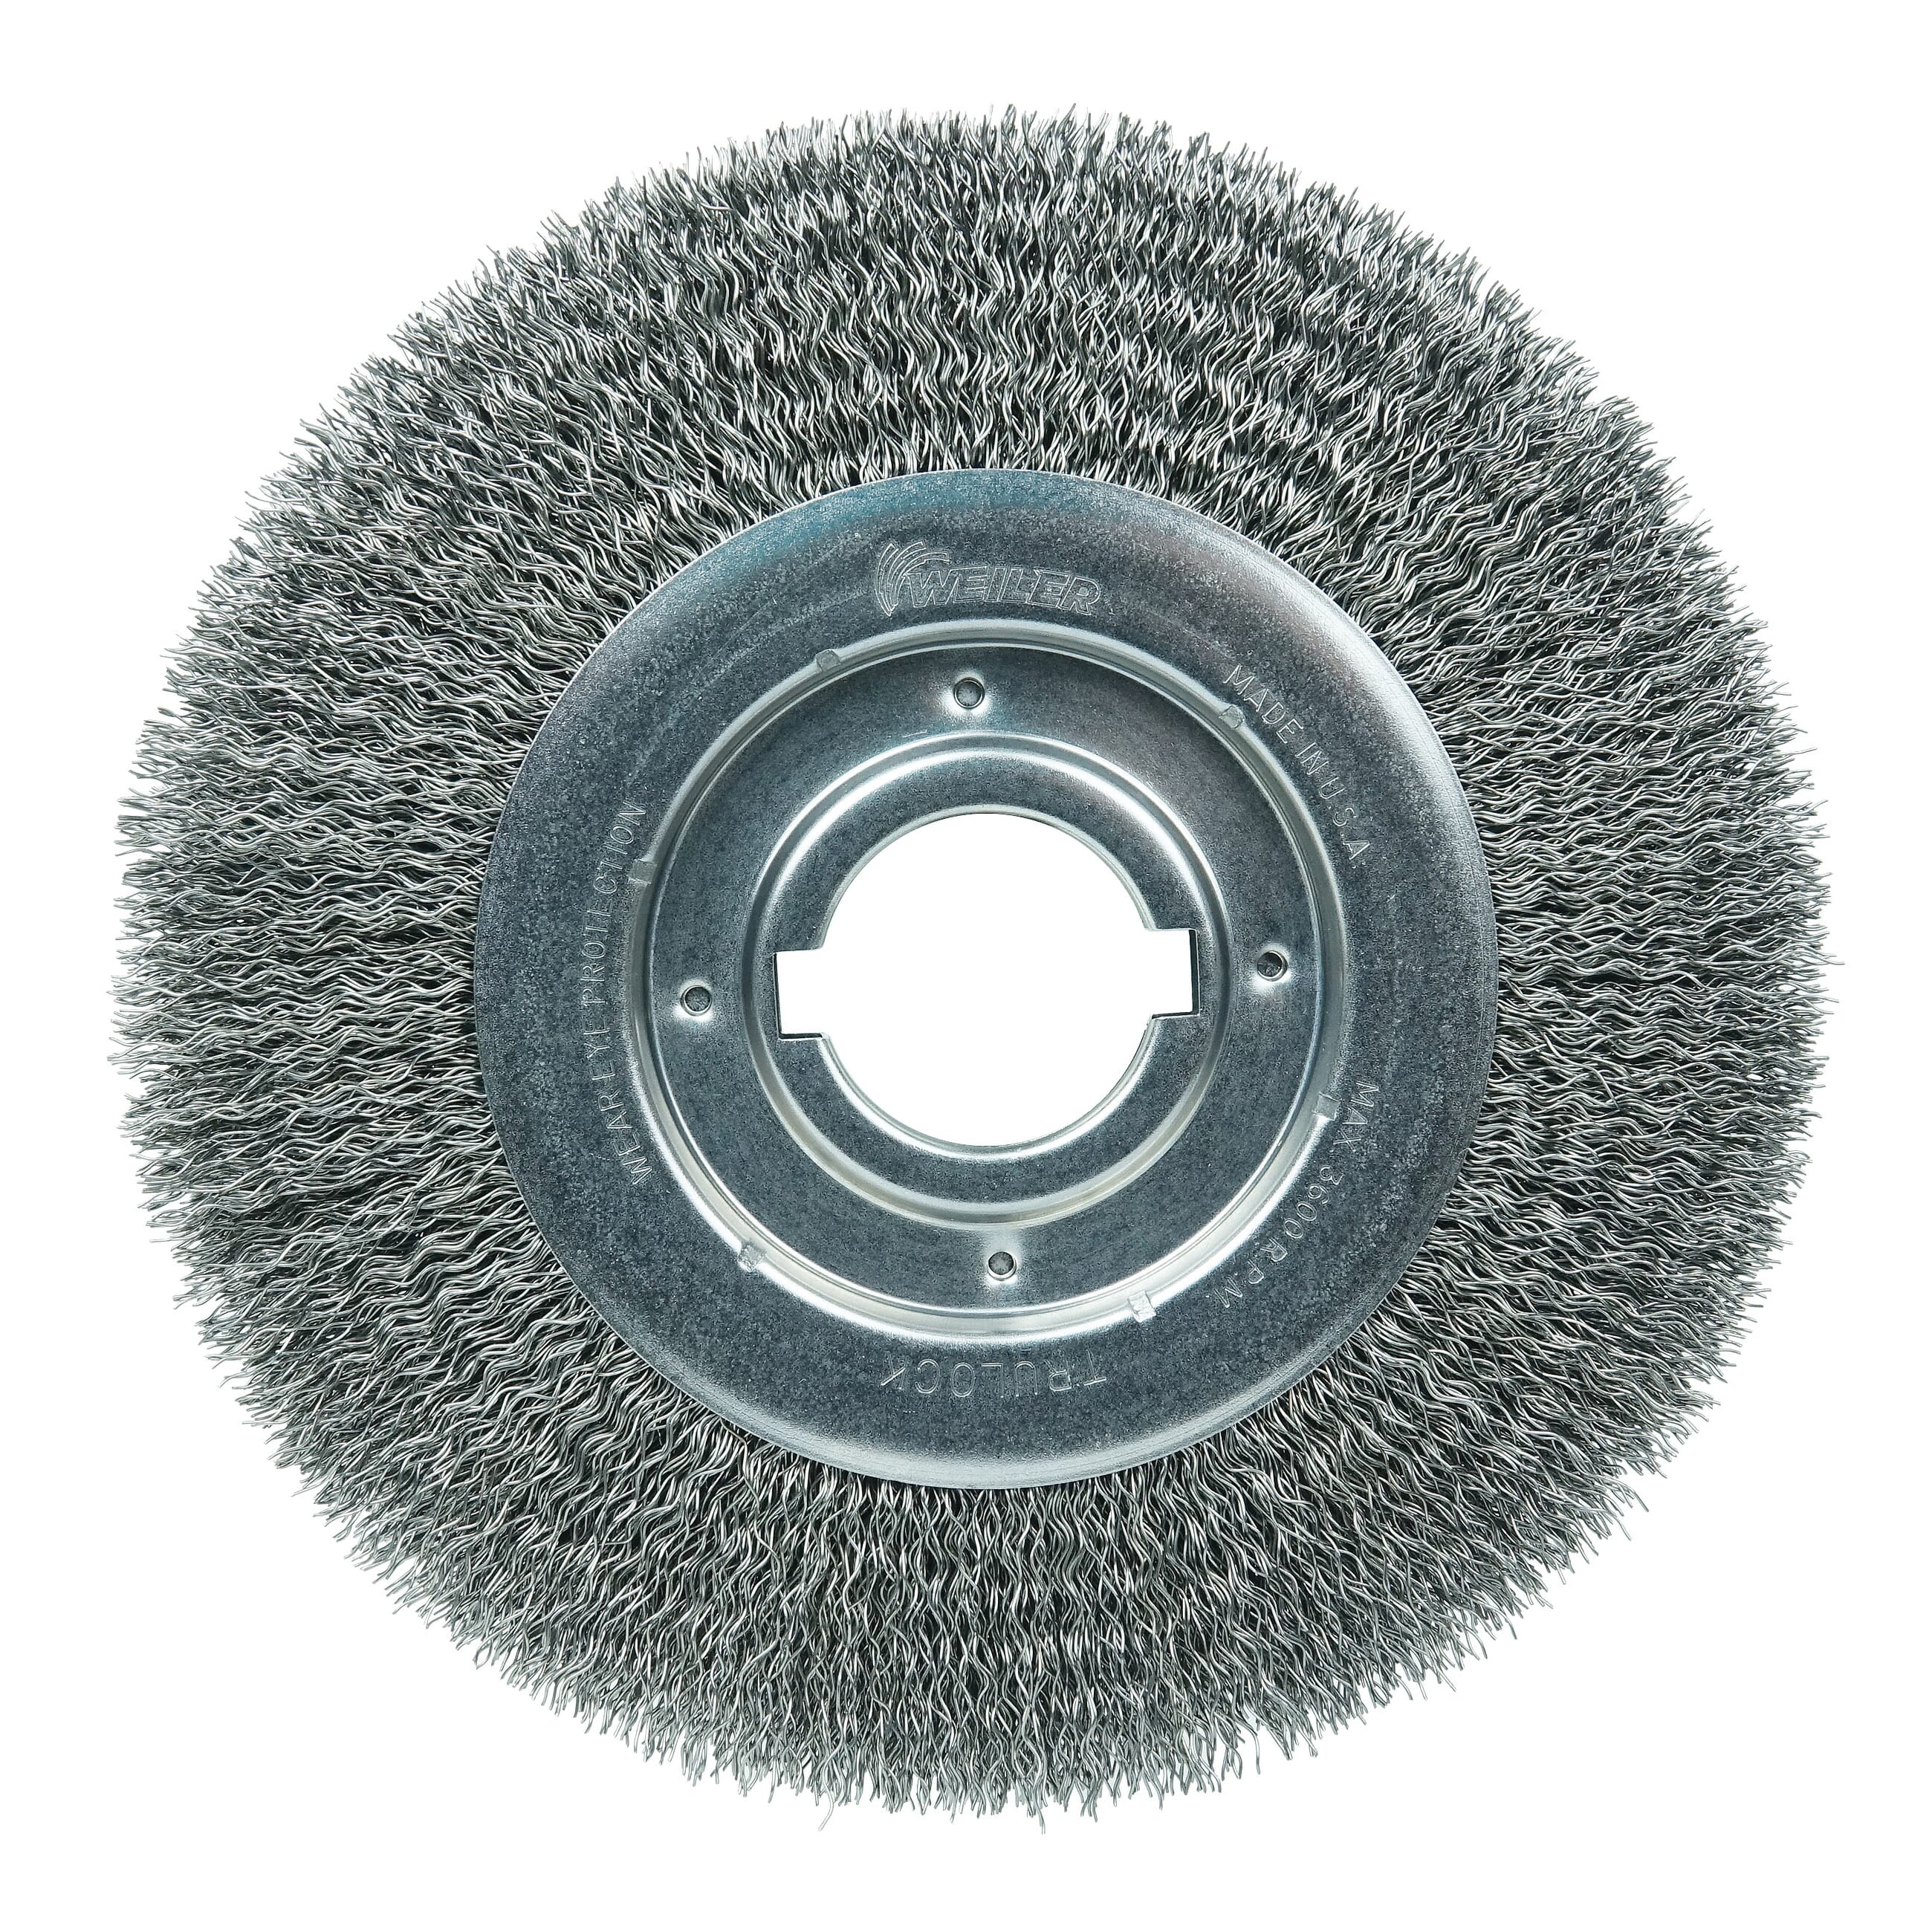 Weiler® 06170 Medium Face Wheel Brush, 10 in Dia Brush, 1-1/8 in W Face, 0.02 in Dia Crimped Filament/Wire, 2 in Arbor Hole